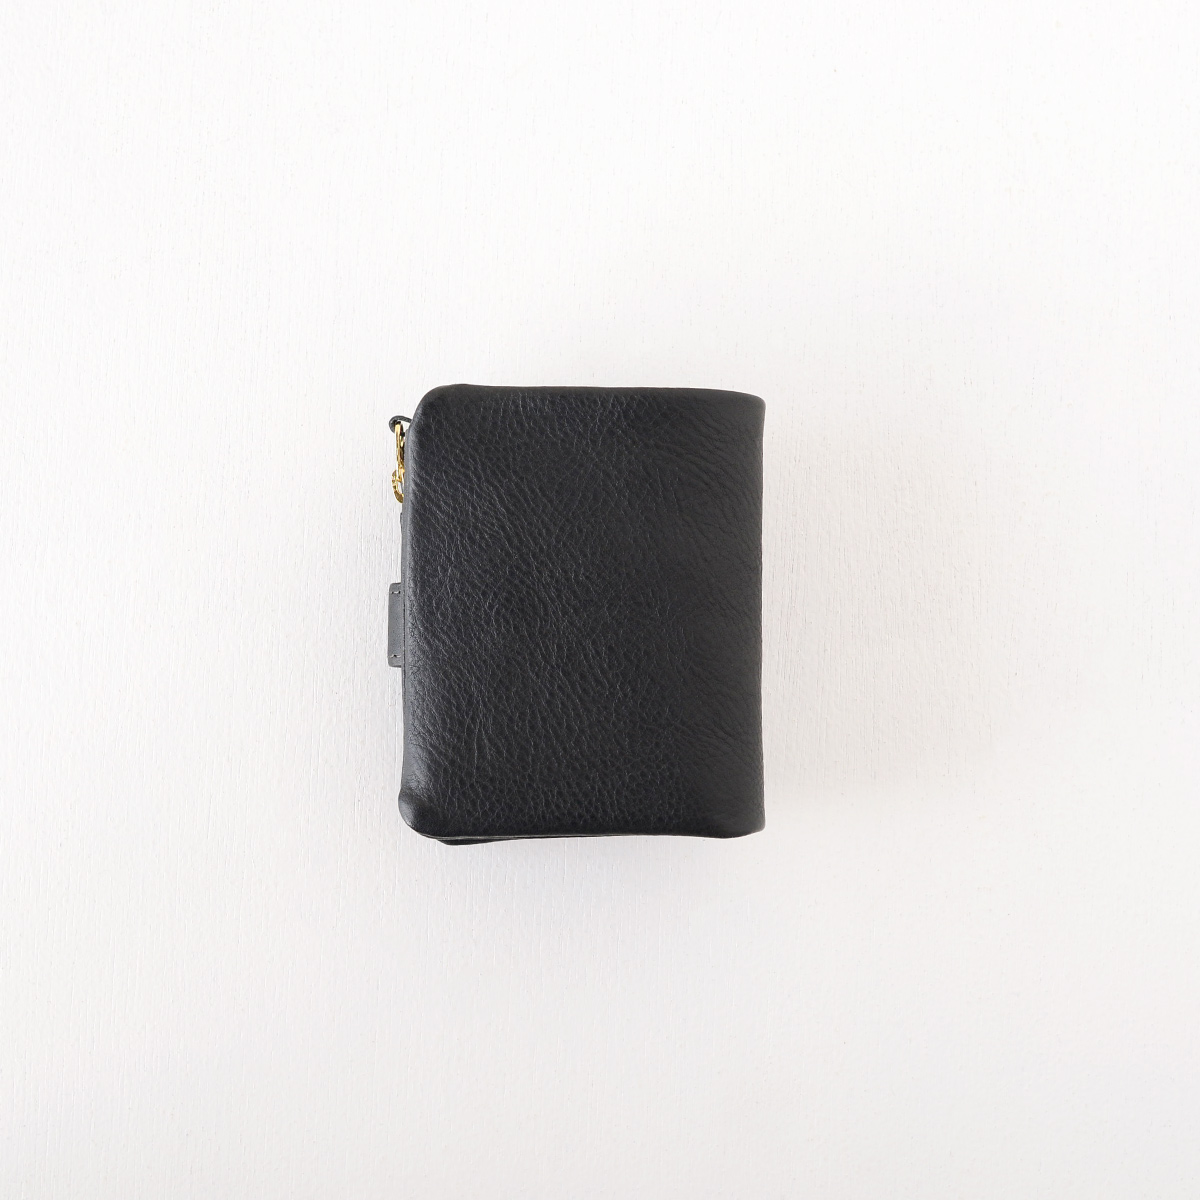 CINQ (サンク) 2つ折り財布 ブラック / 本革 レザー レディース メンズ 二つ折り | 生成りな暮らしのご提案／キナル